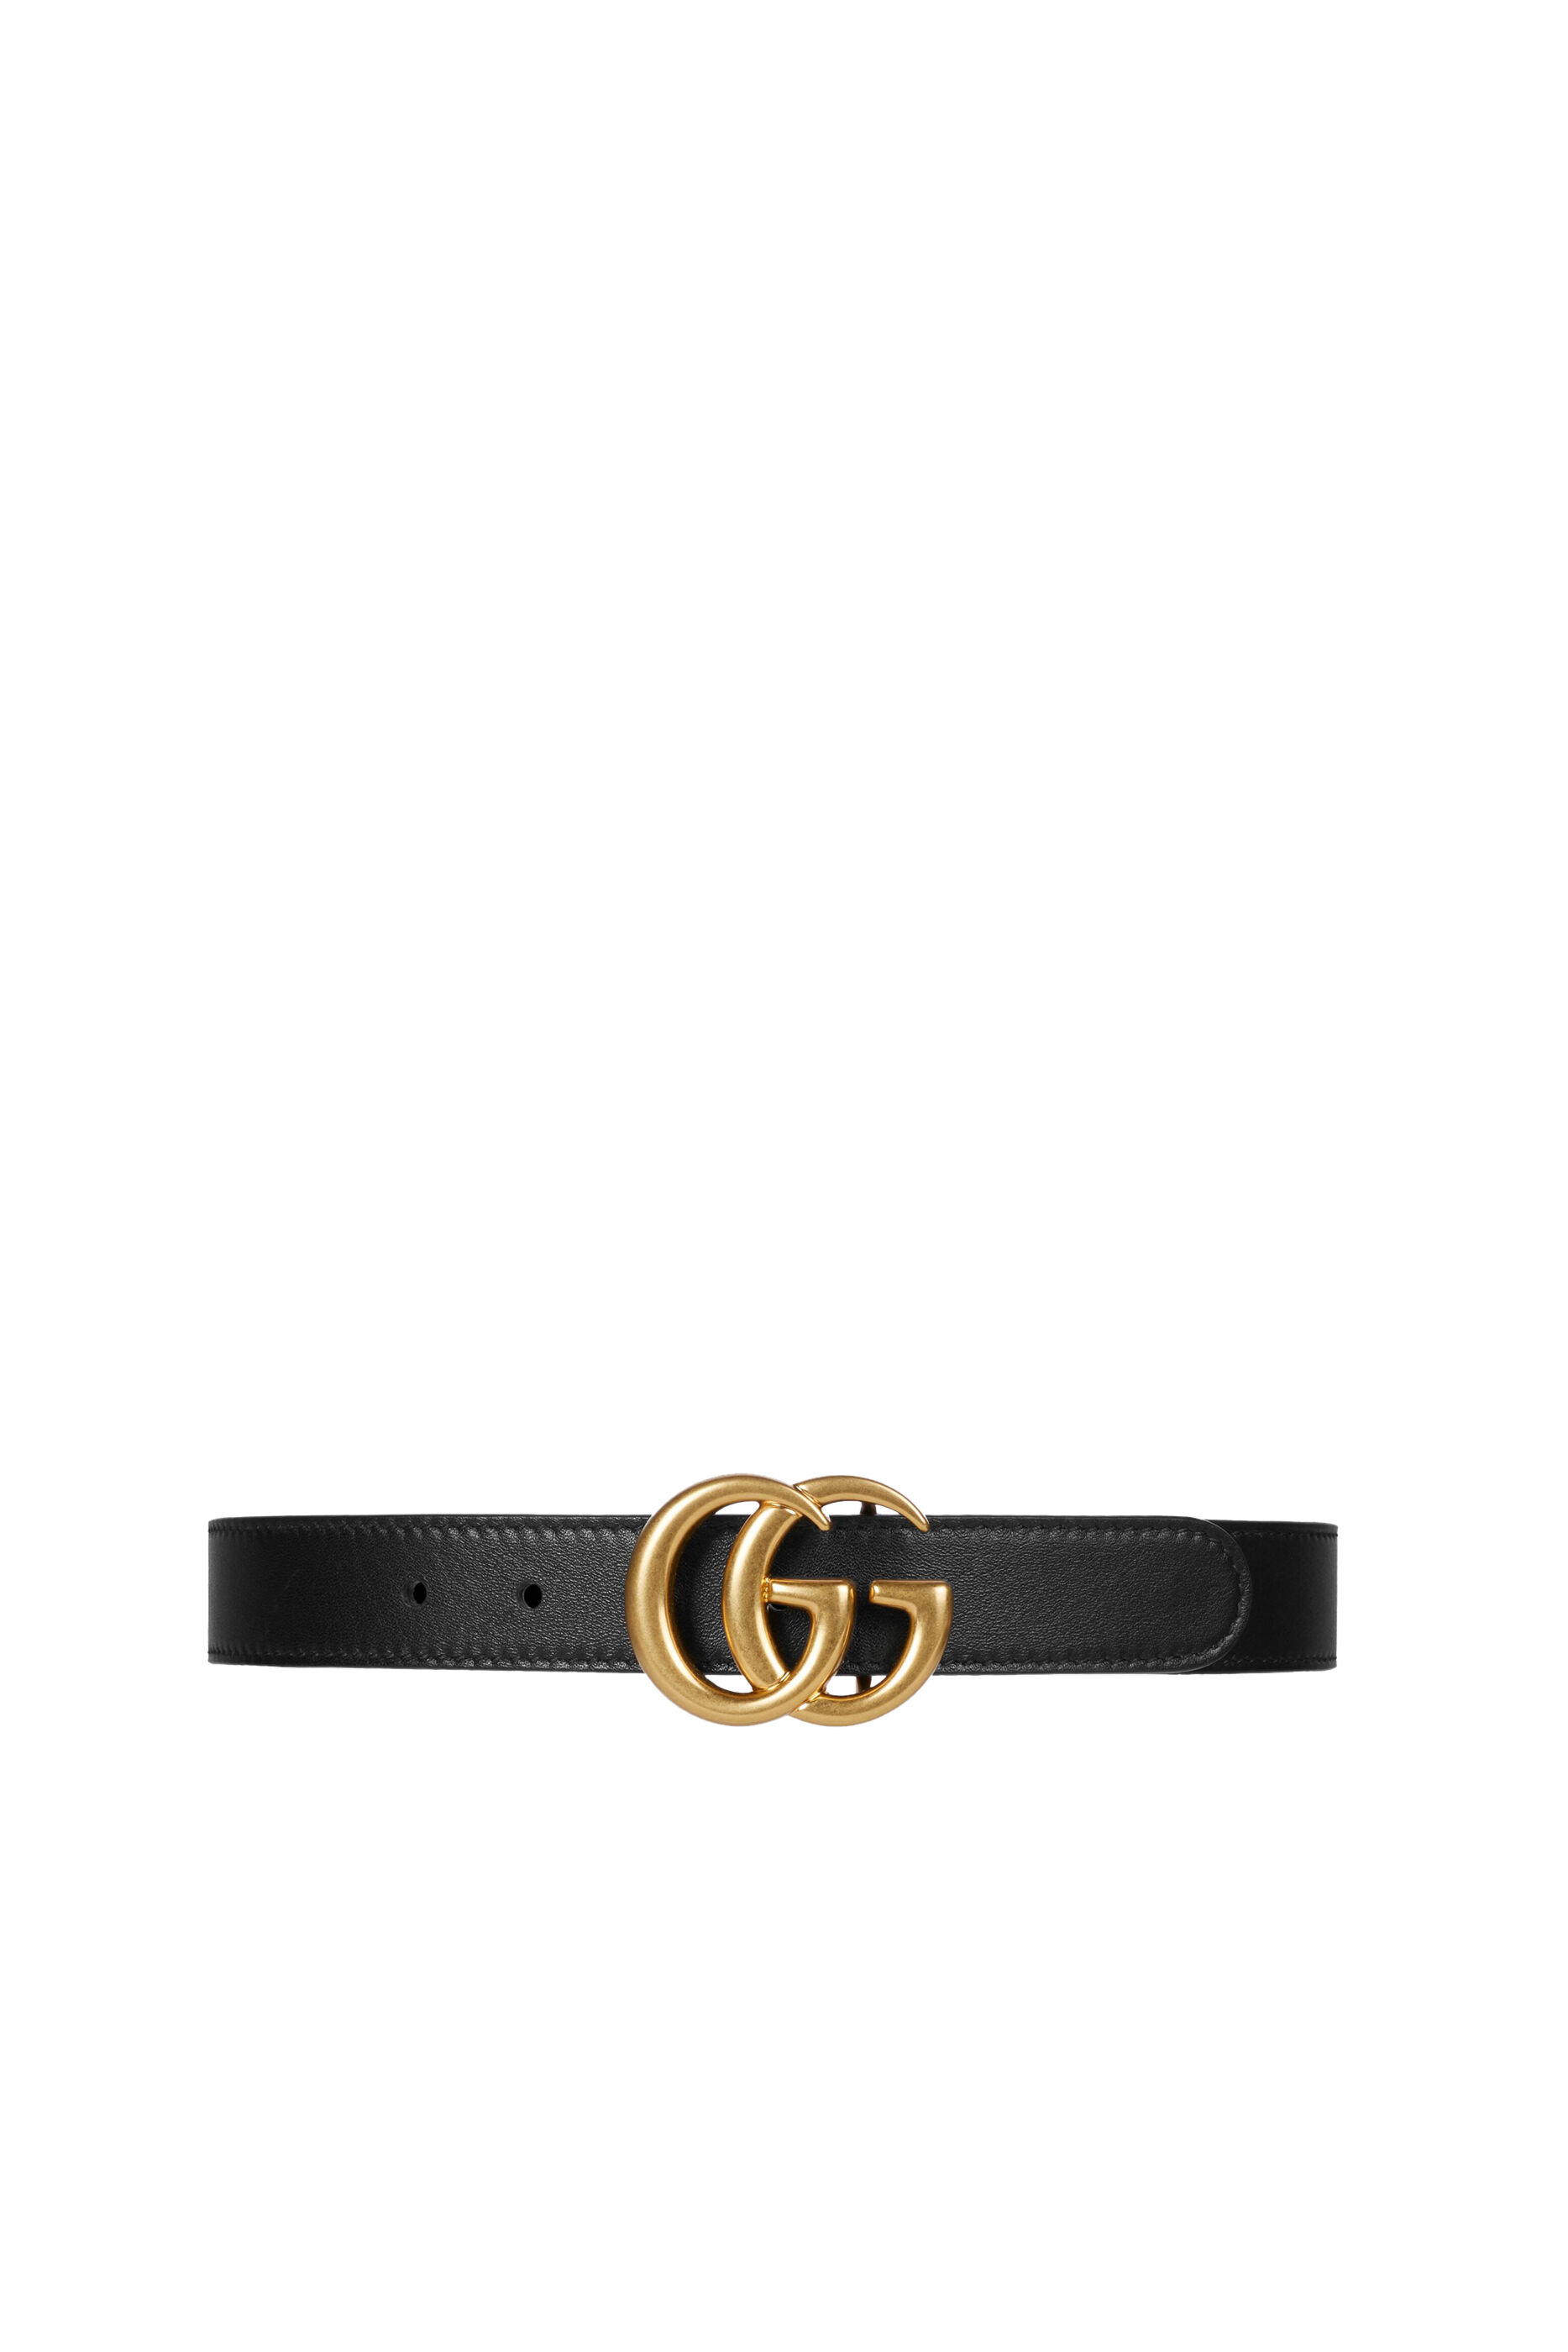 gg buckle slim leather belt